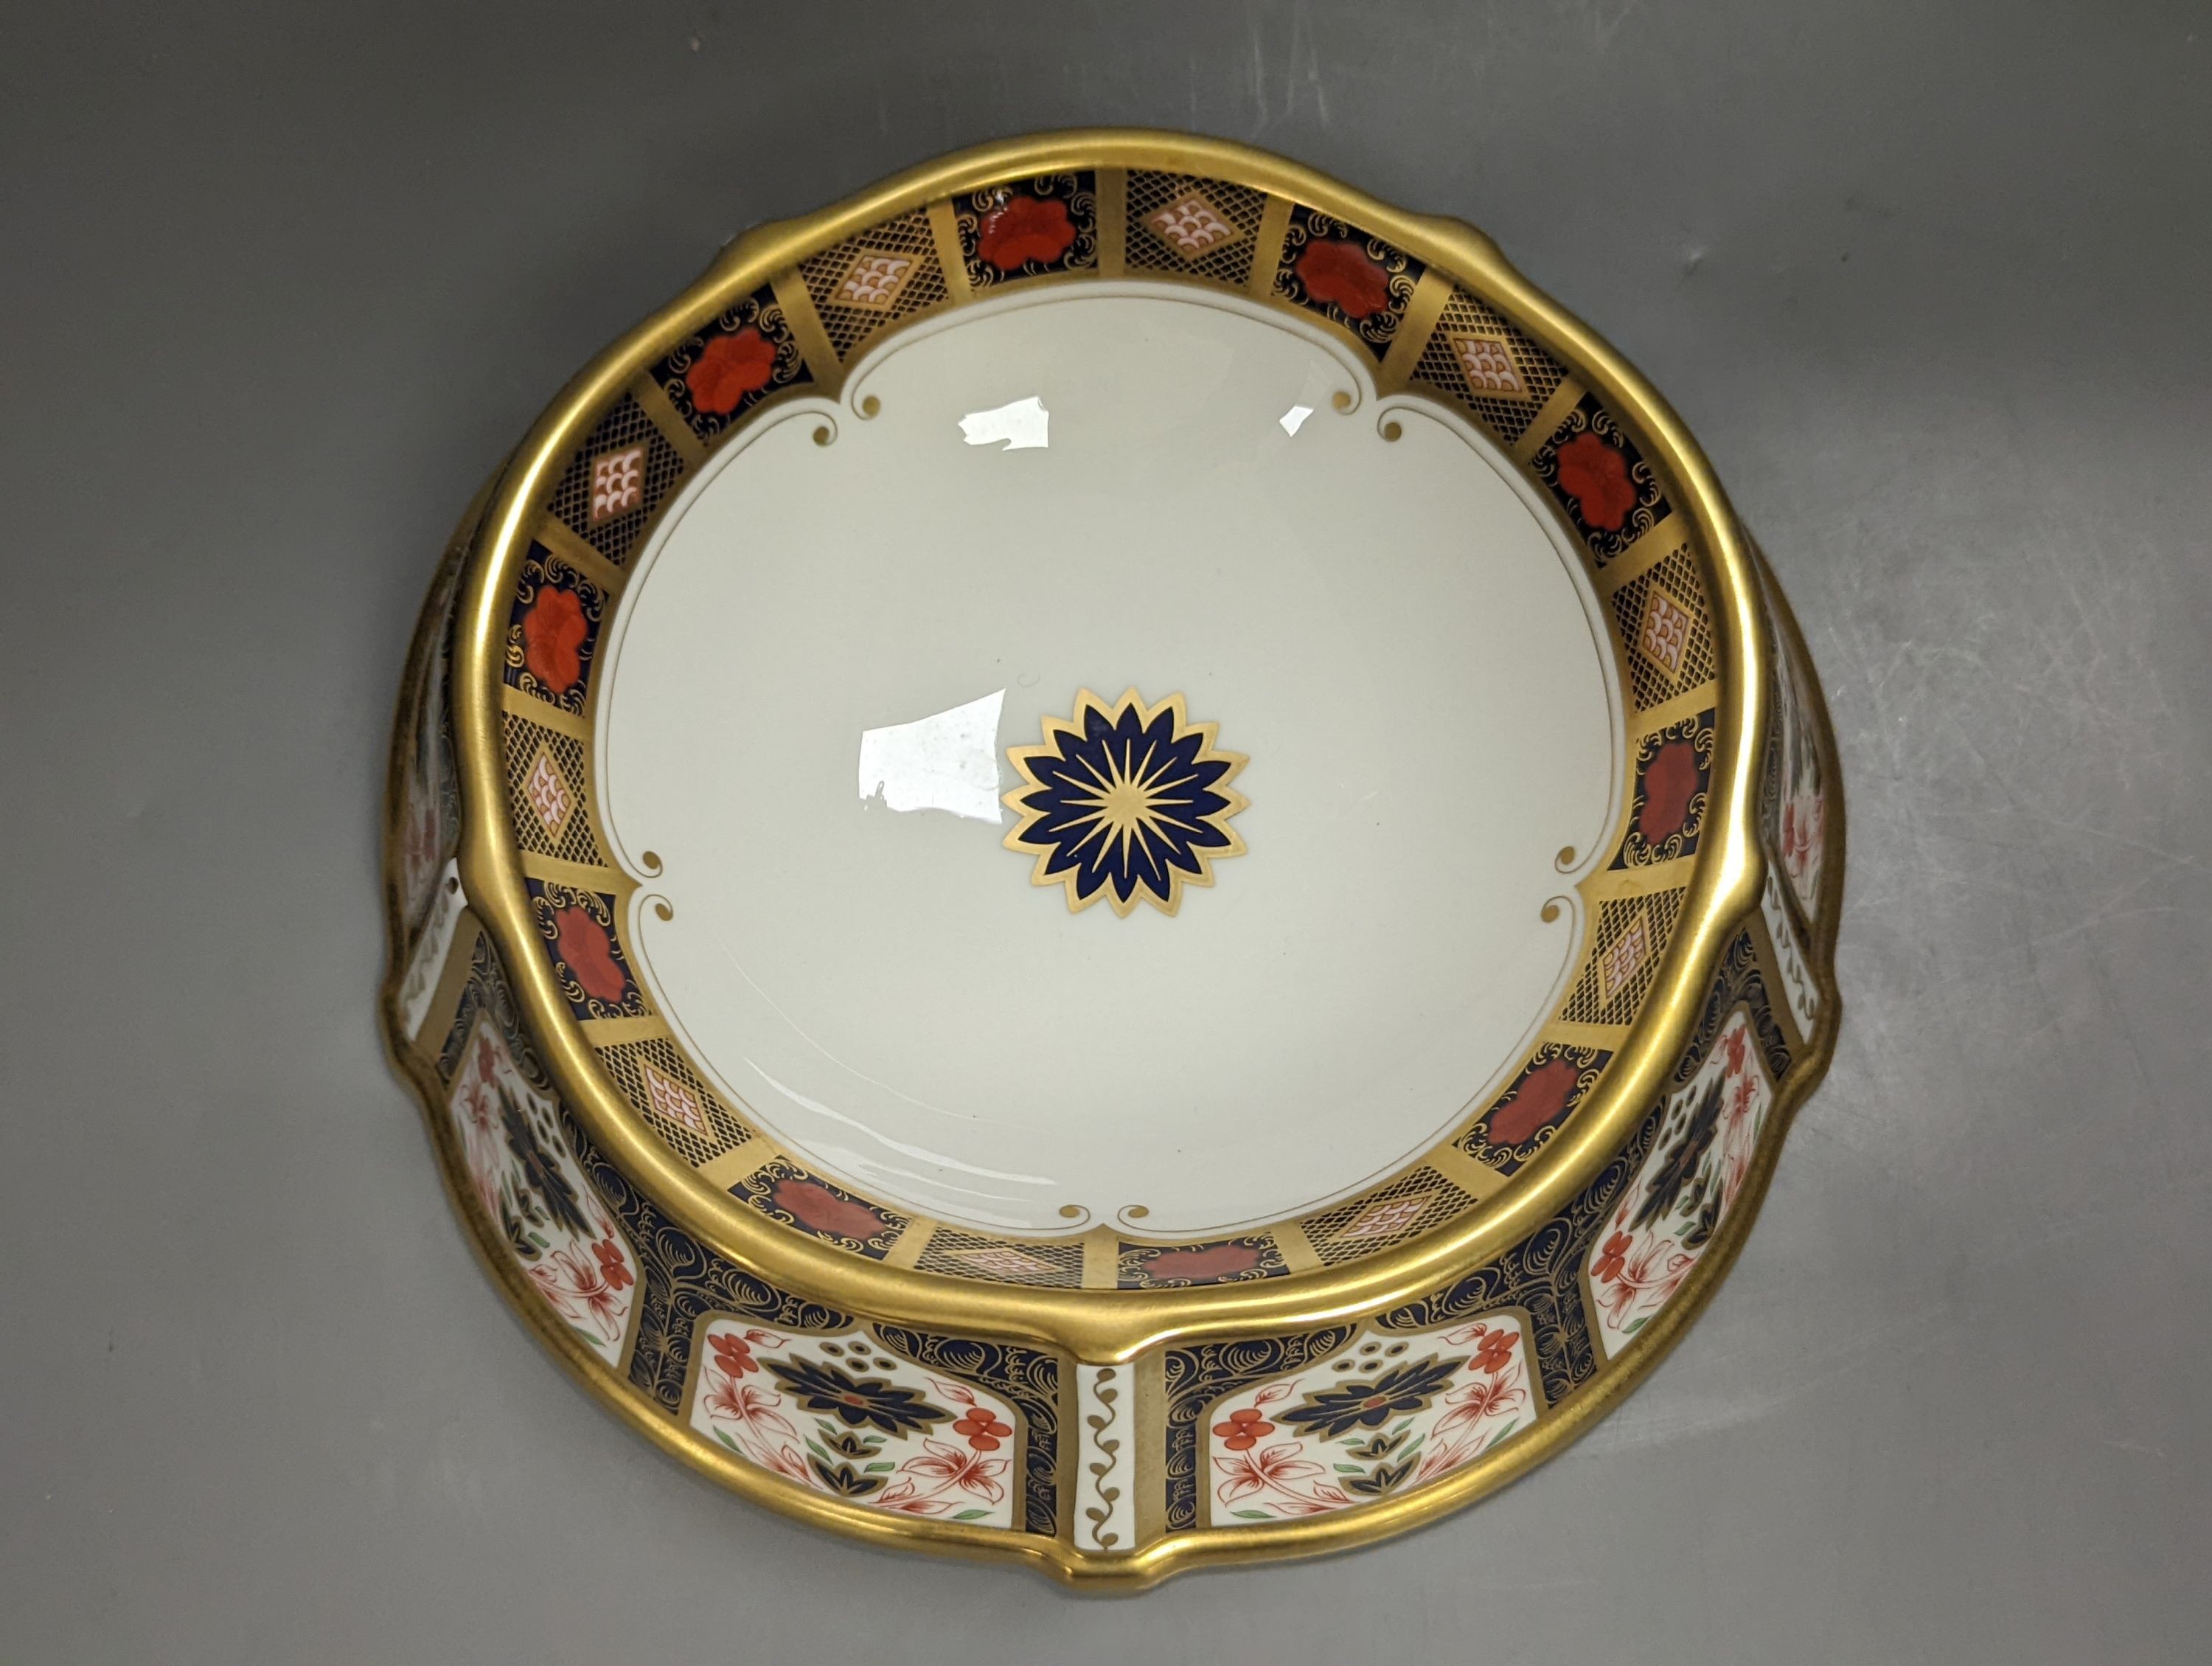 A Royal Crown Derby 1128 pattern dog's dinner bowl, diameter 19cm